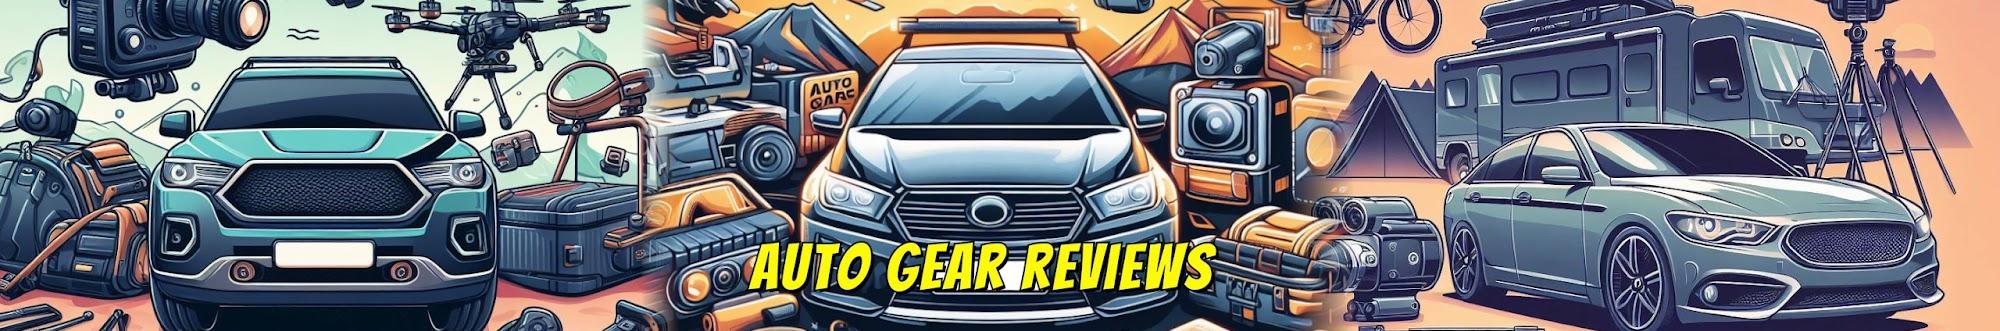 Auto Gear Reviews